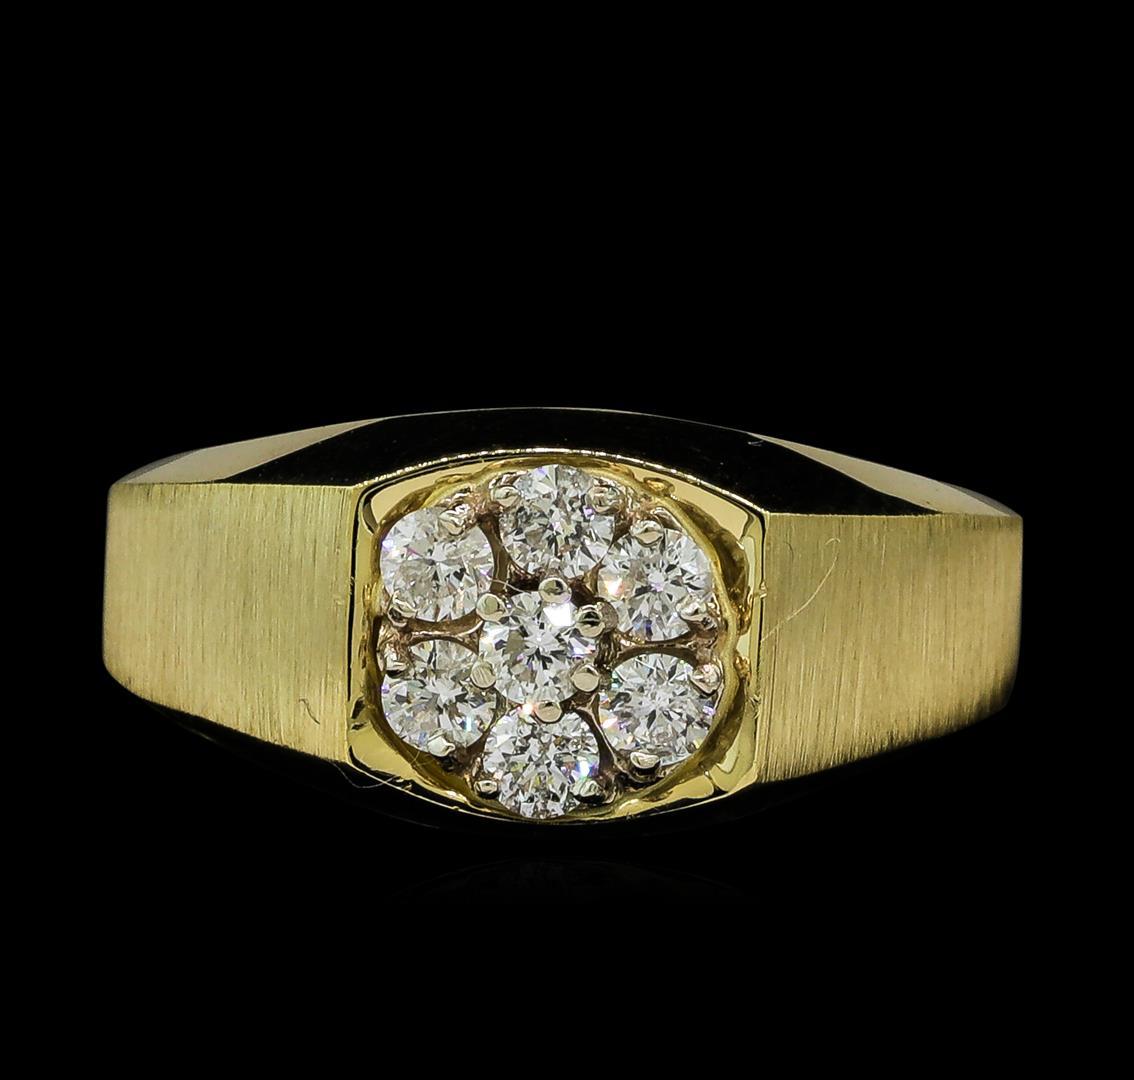 0.56 ctw Diamond Ring - 14KT Yellow Gold